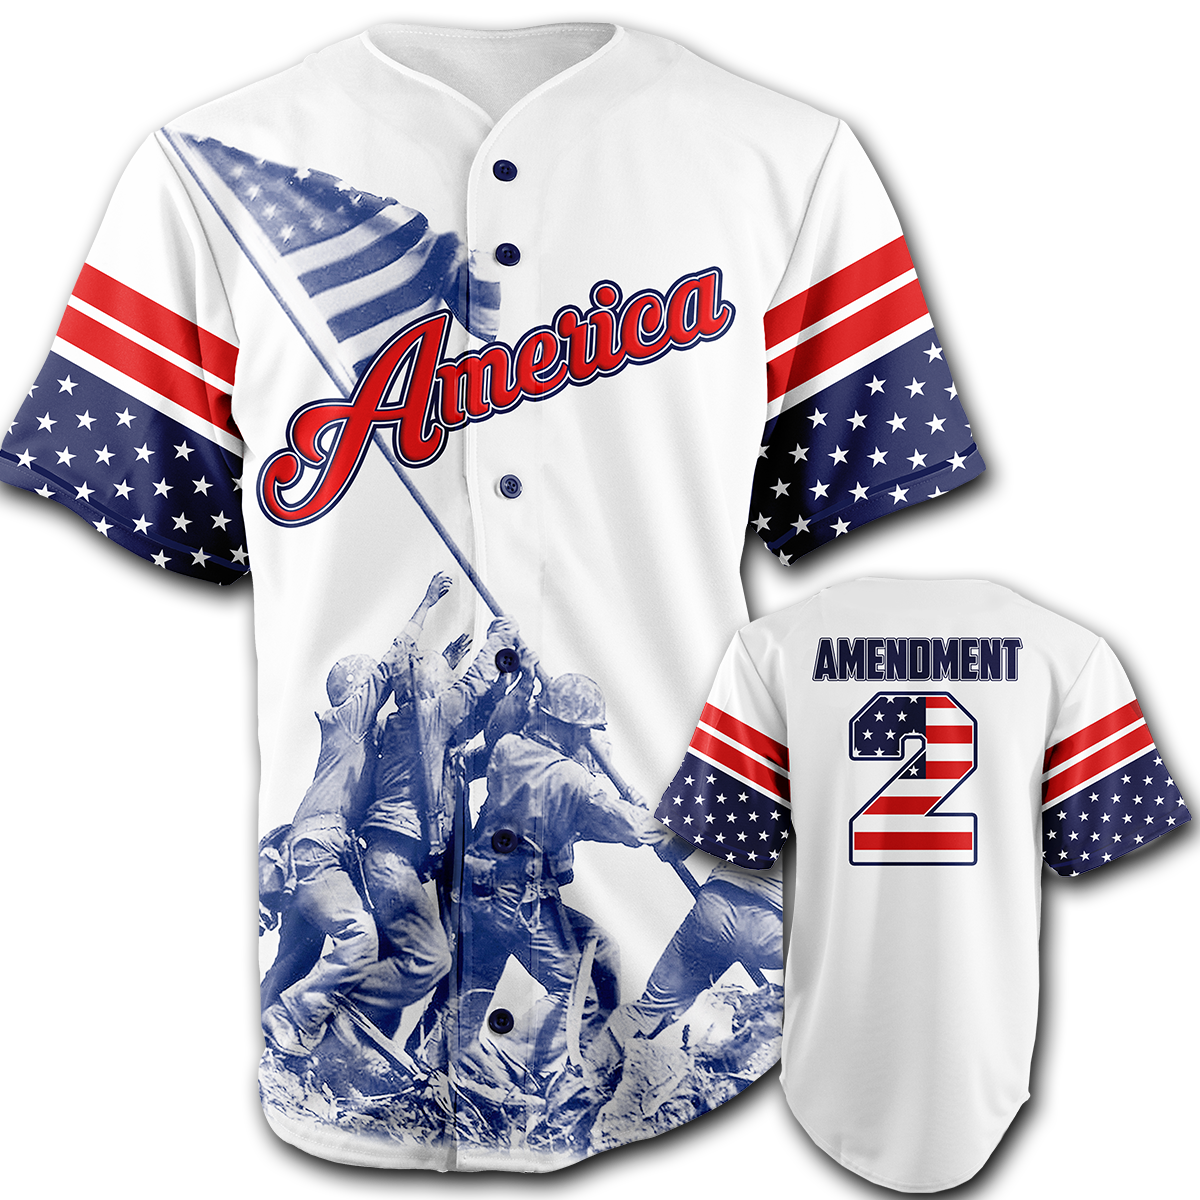 Team America 2nd Amendment Jersey